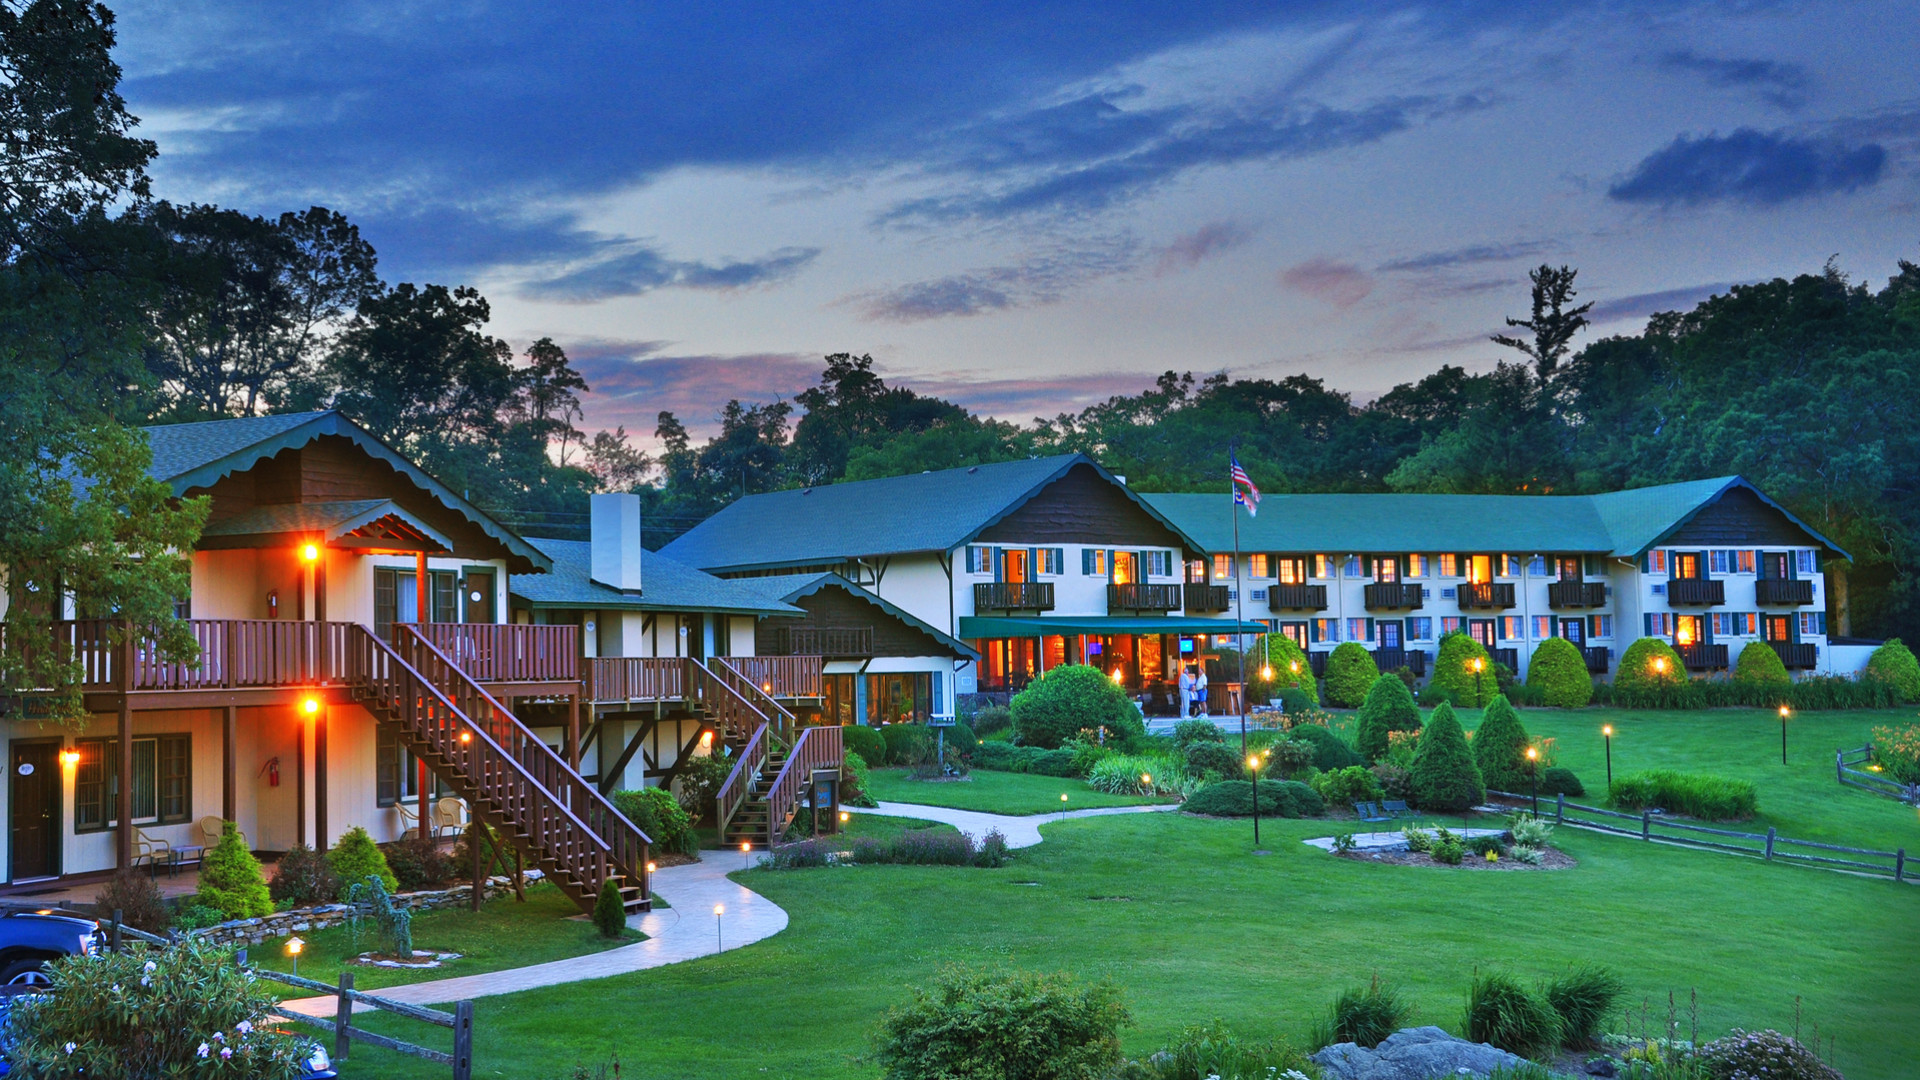 NC Mountain Resort Portfolio Sold for $15.65M